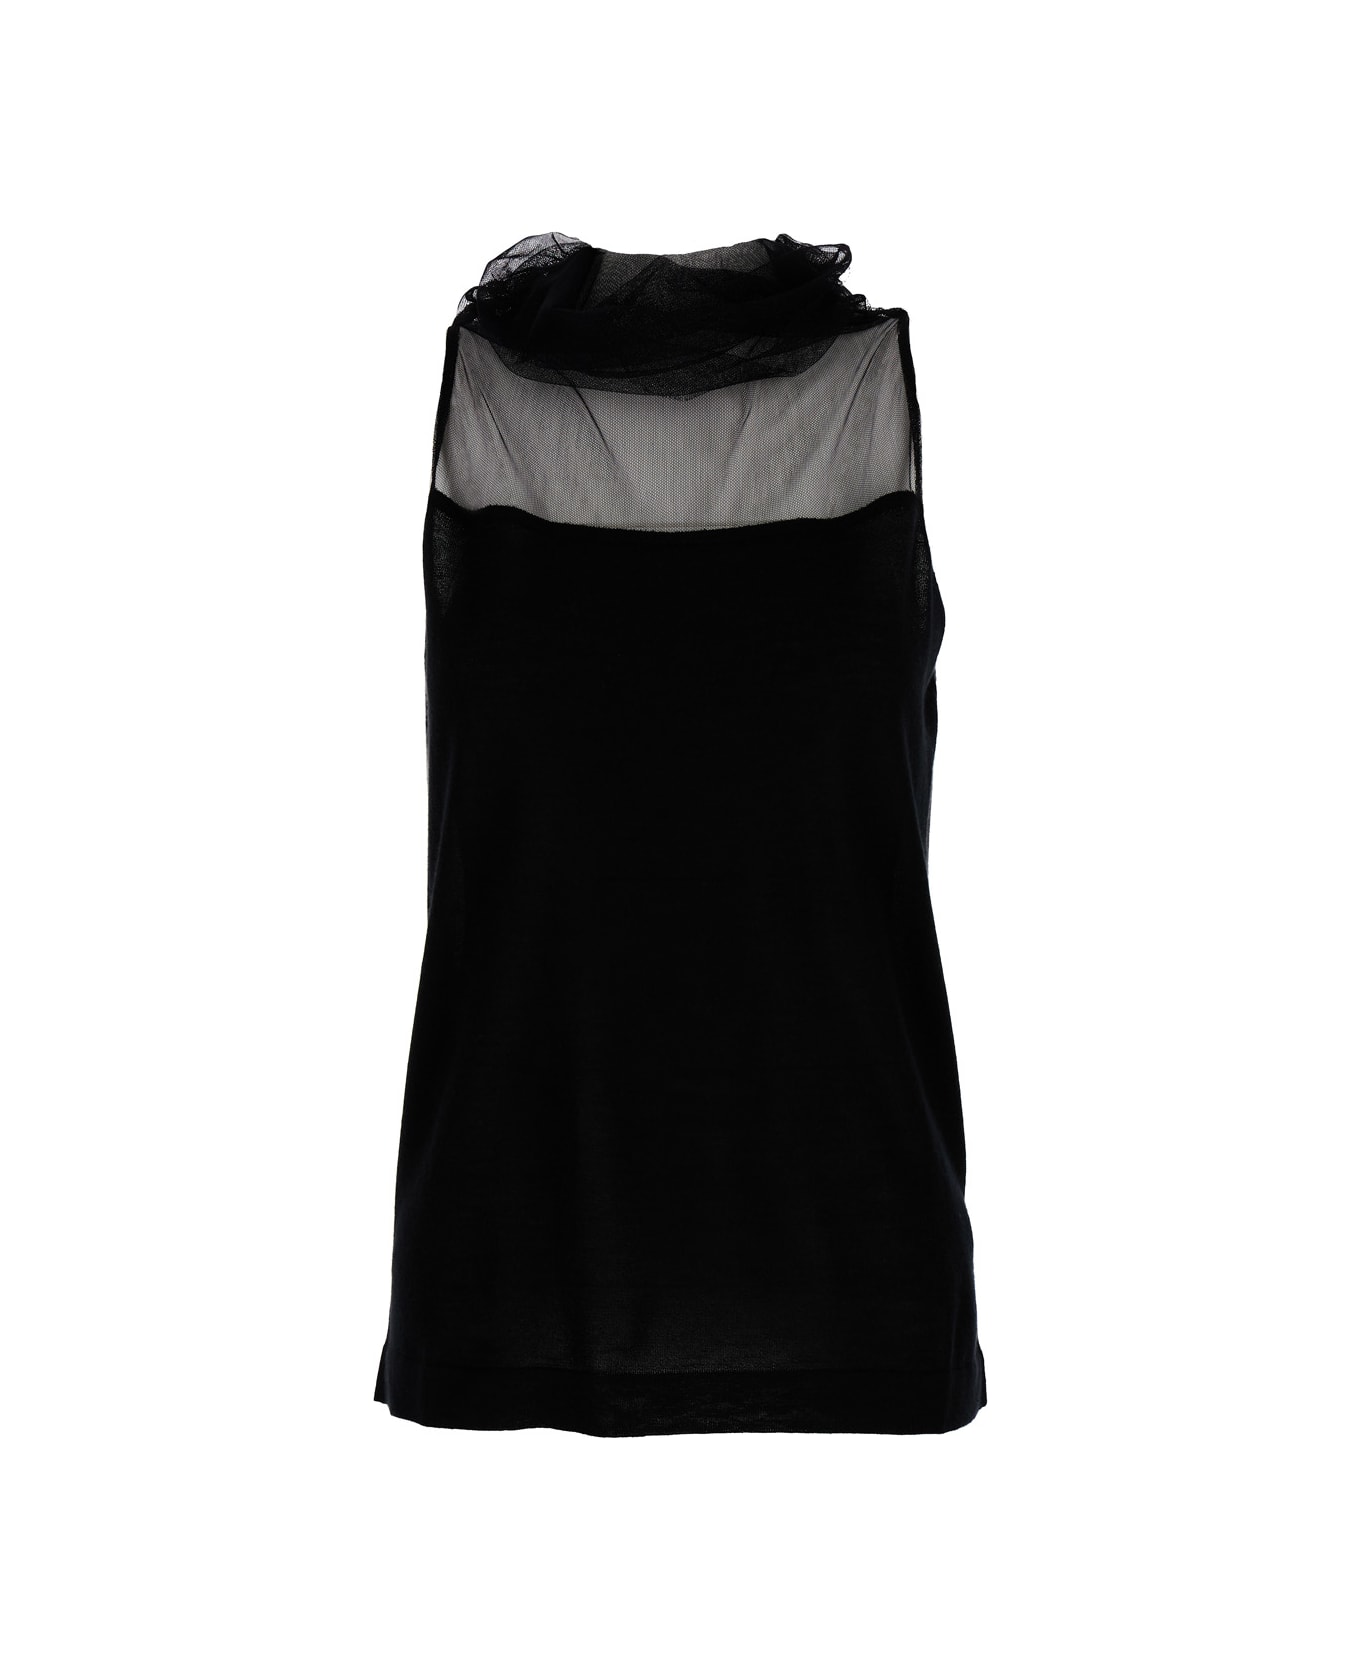 Fabiana Filippi High Neck Black Top In Silk & Cashmere Blend Woman - Black ニットウェア